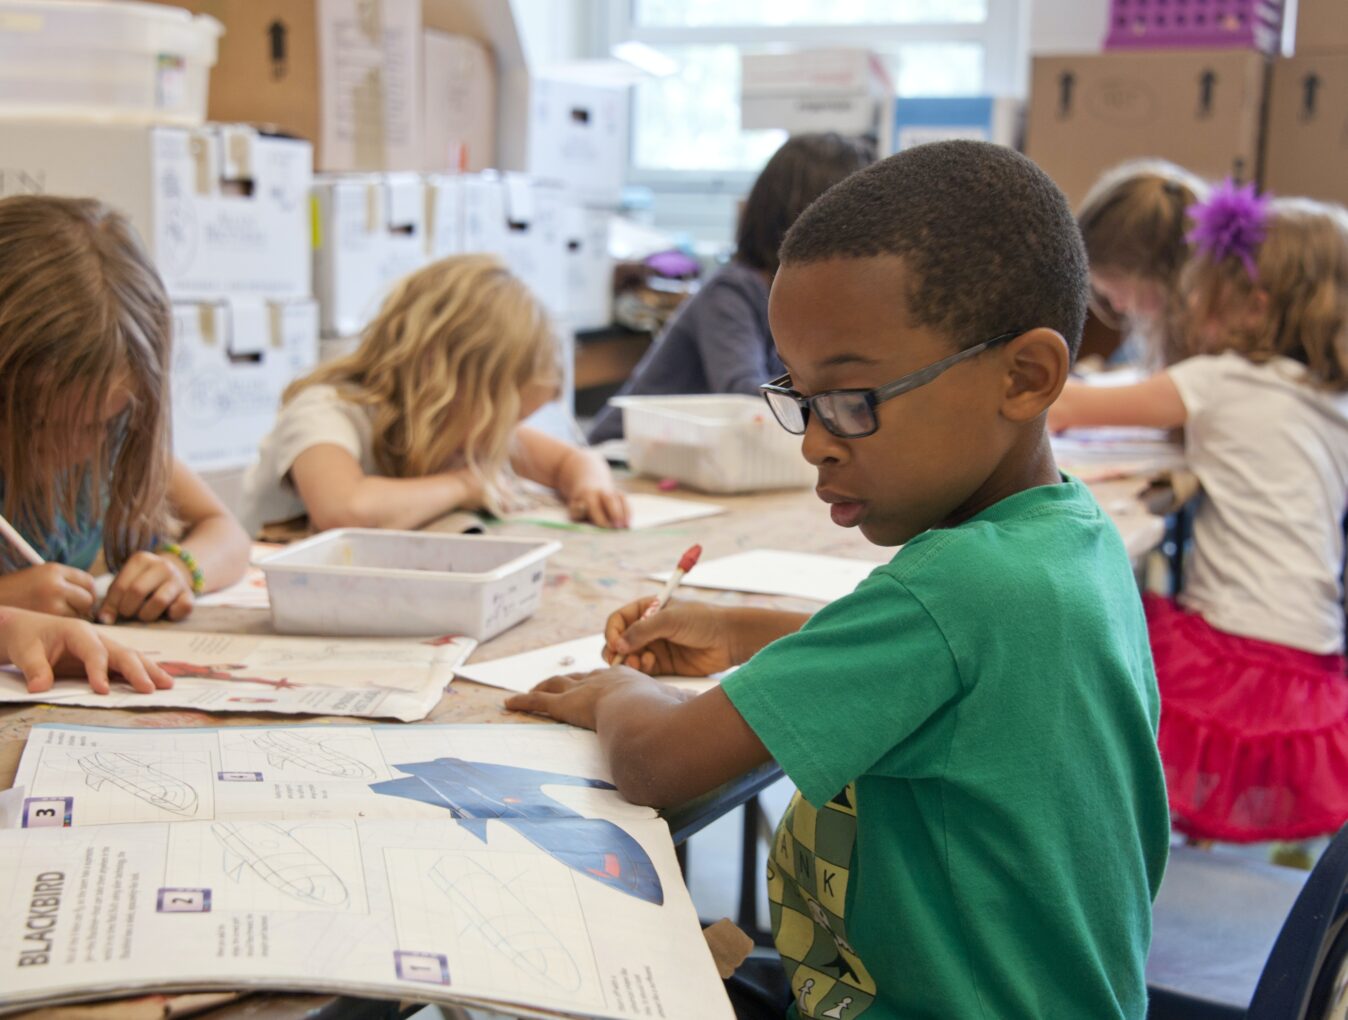 Children work in a classroom.